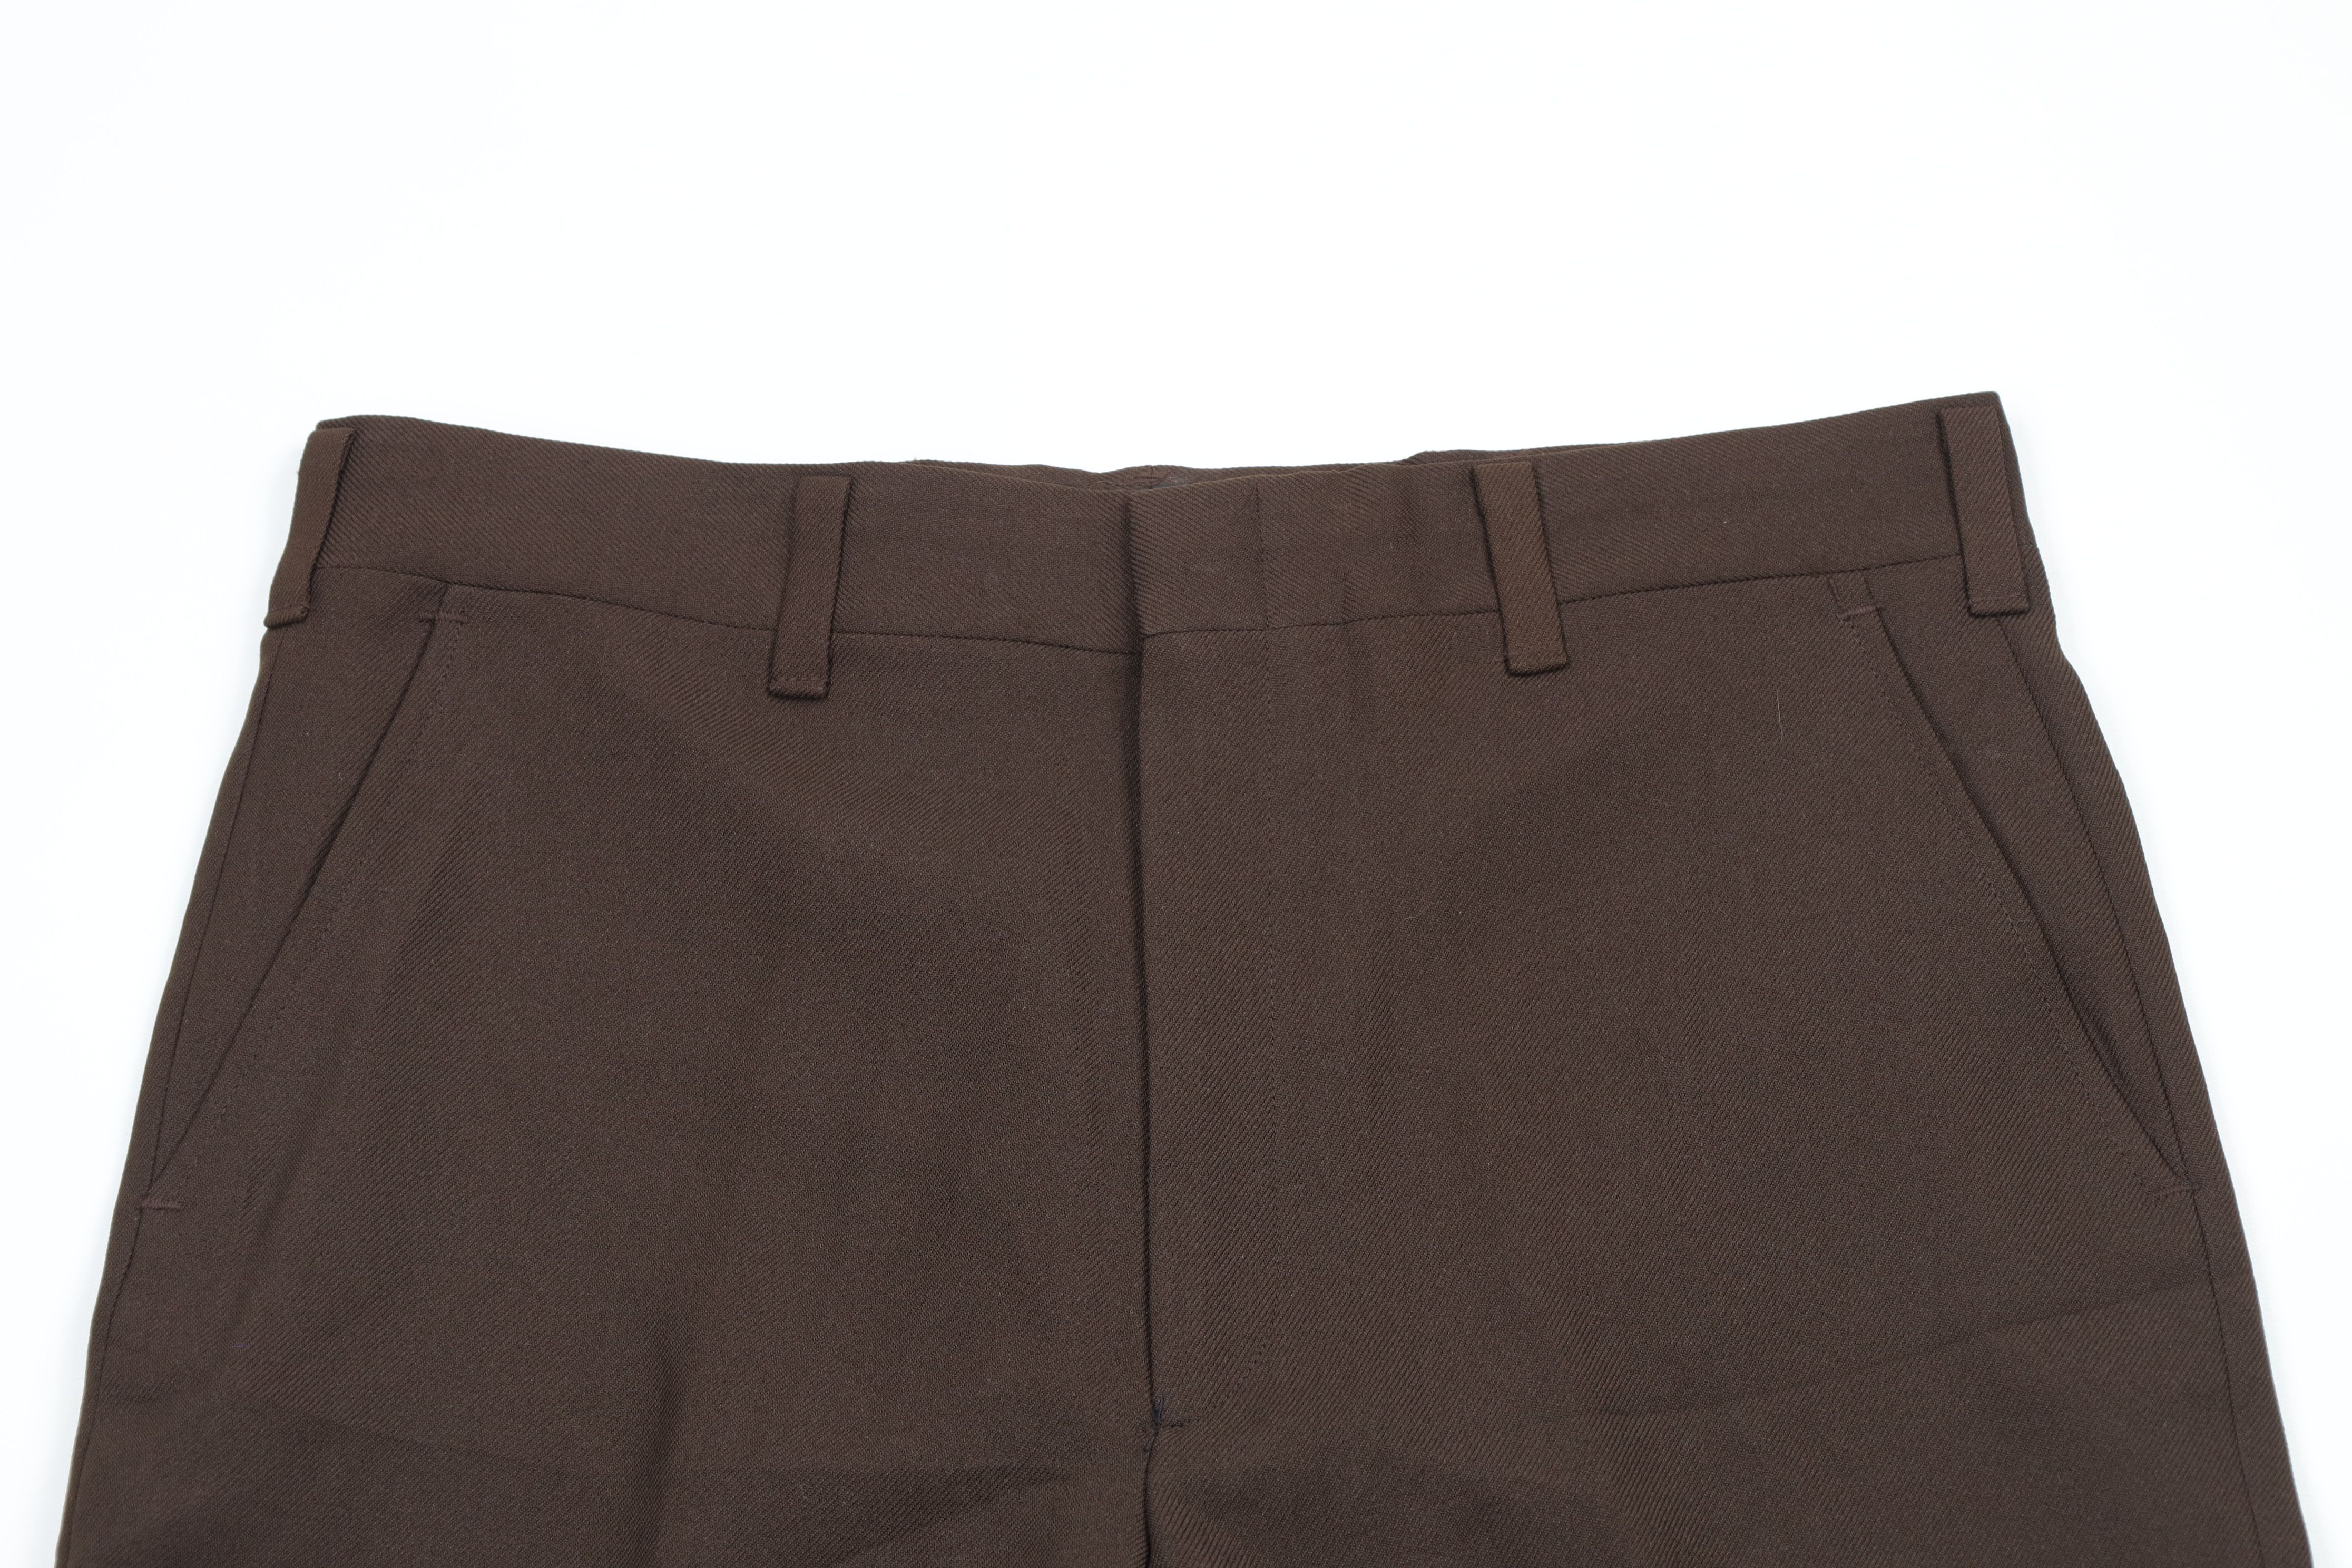 Vintage Vintage 70s Streetwear Knit Flared Bell Bottoms Pants Brown Size US 32 / EU 48 - 2 Preview